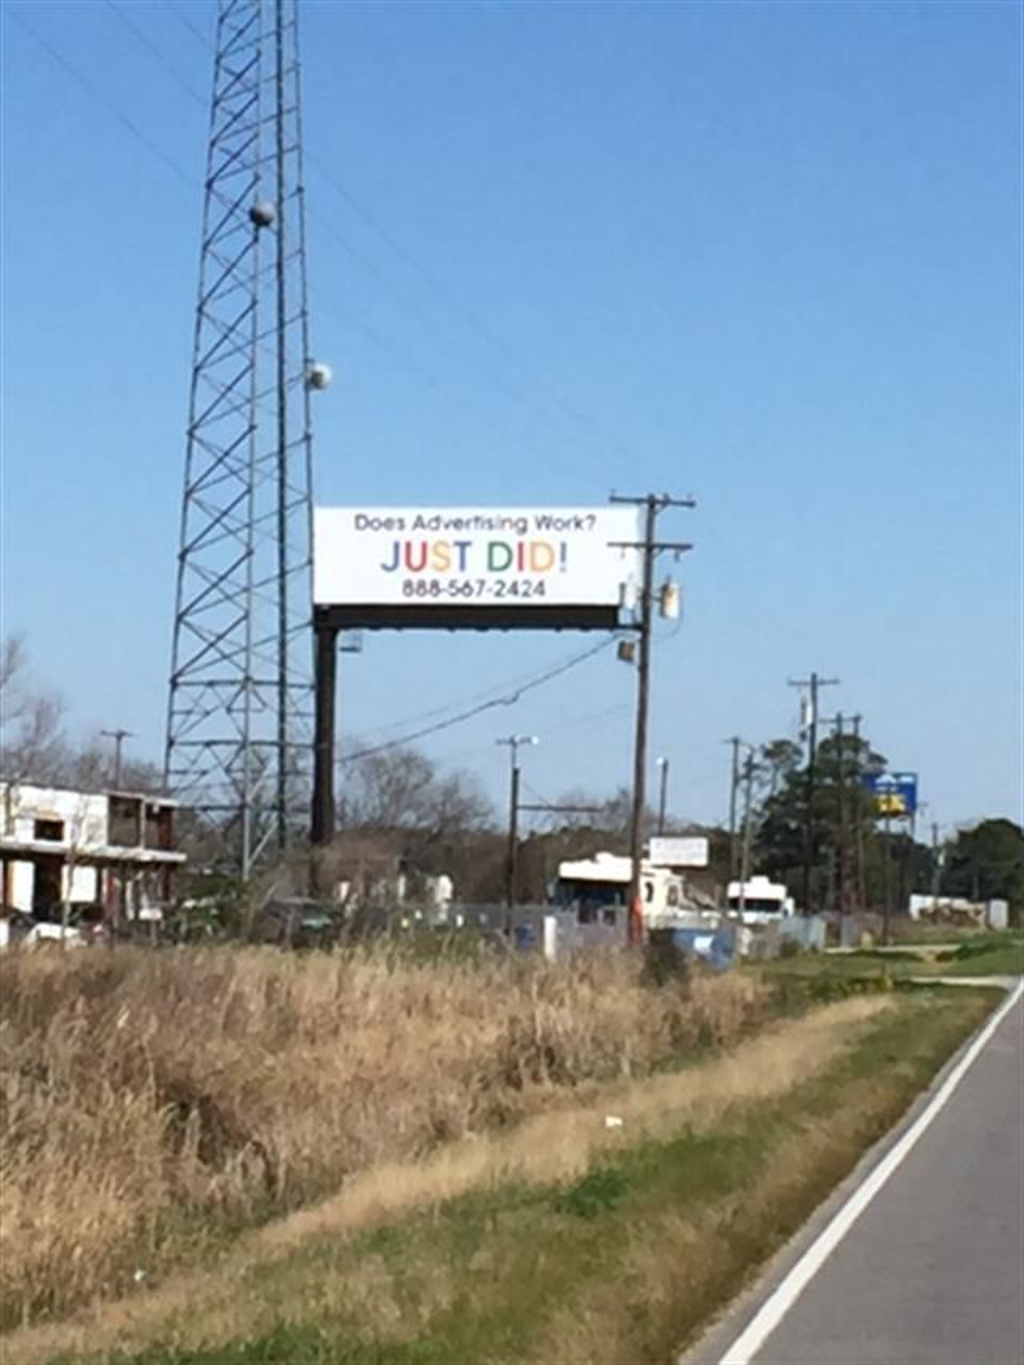 Photo of a billboard in Egan